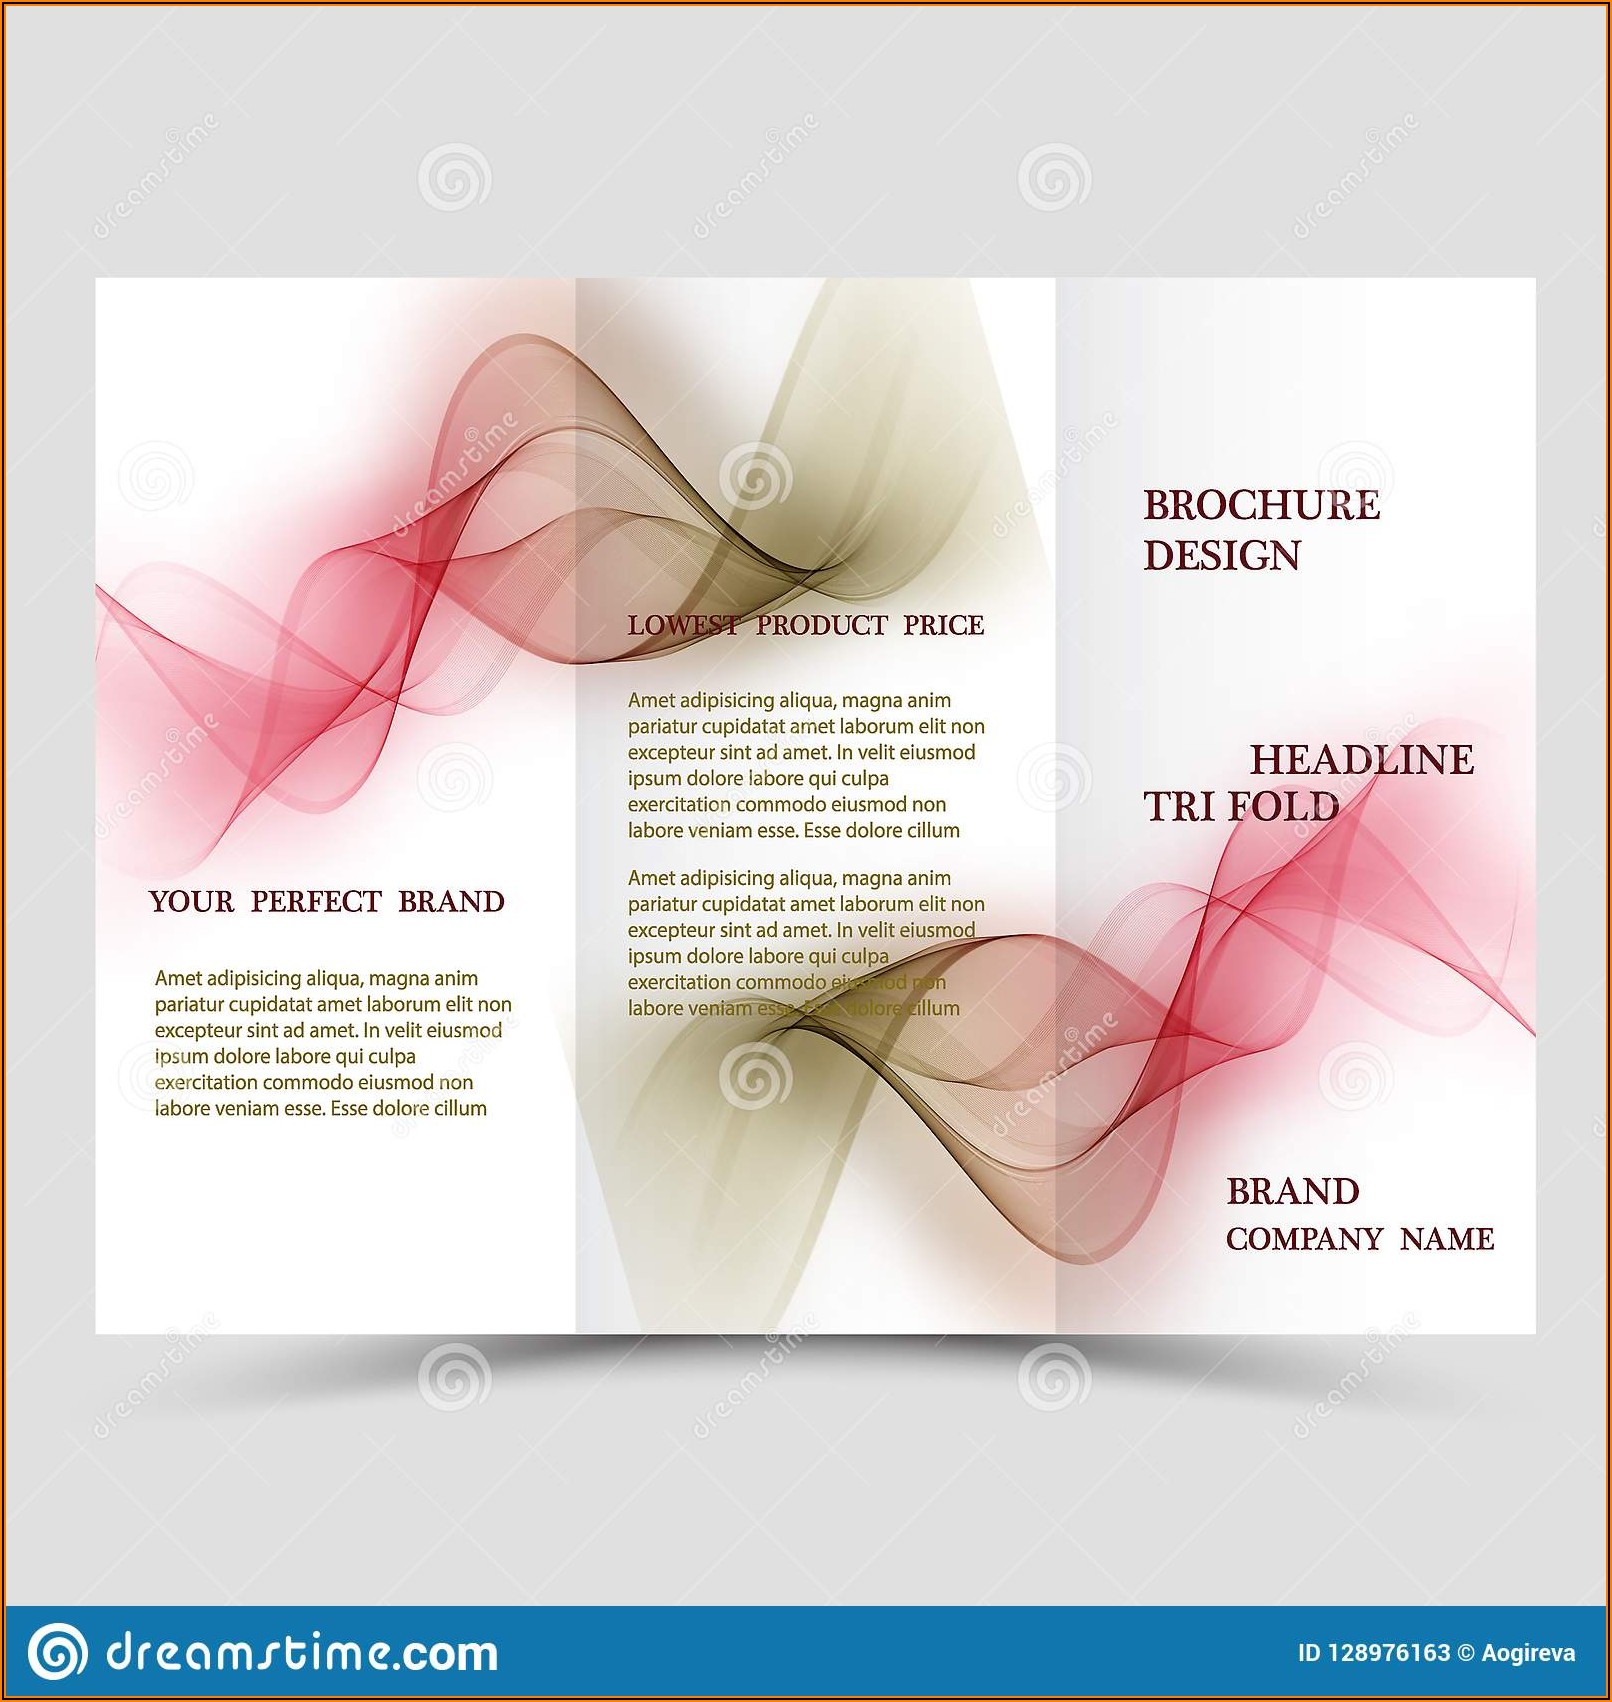 Three Fold Brochure Design Template